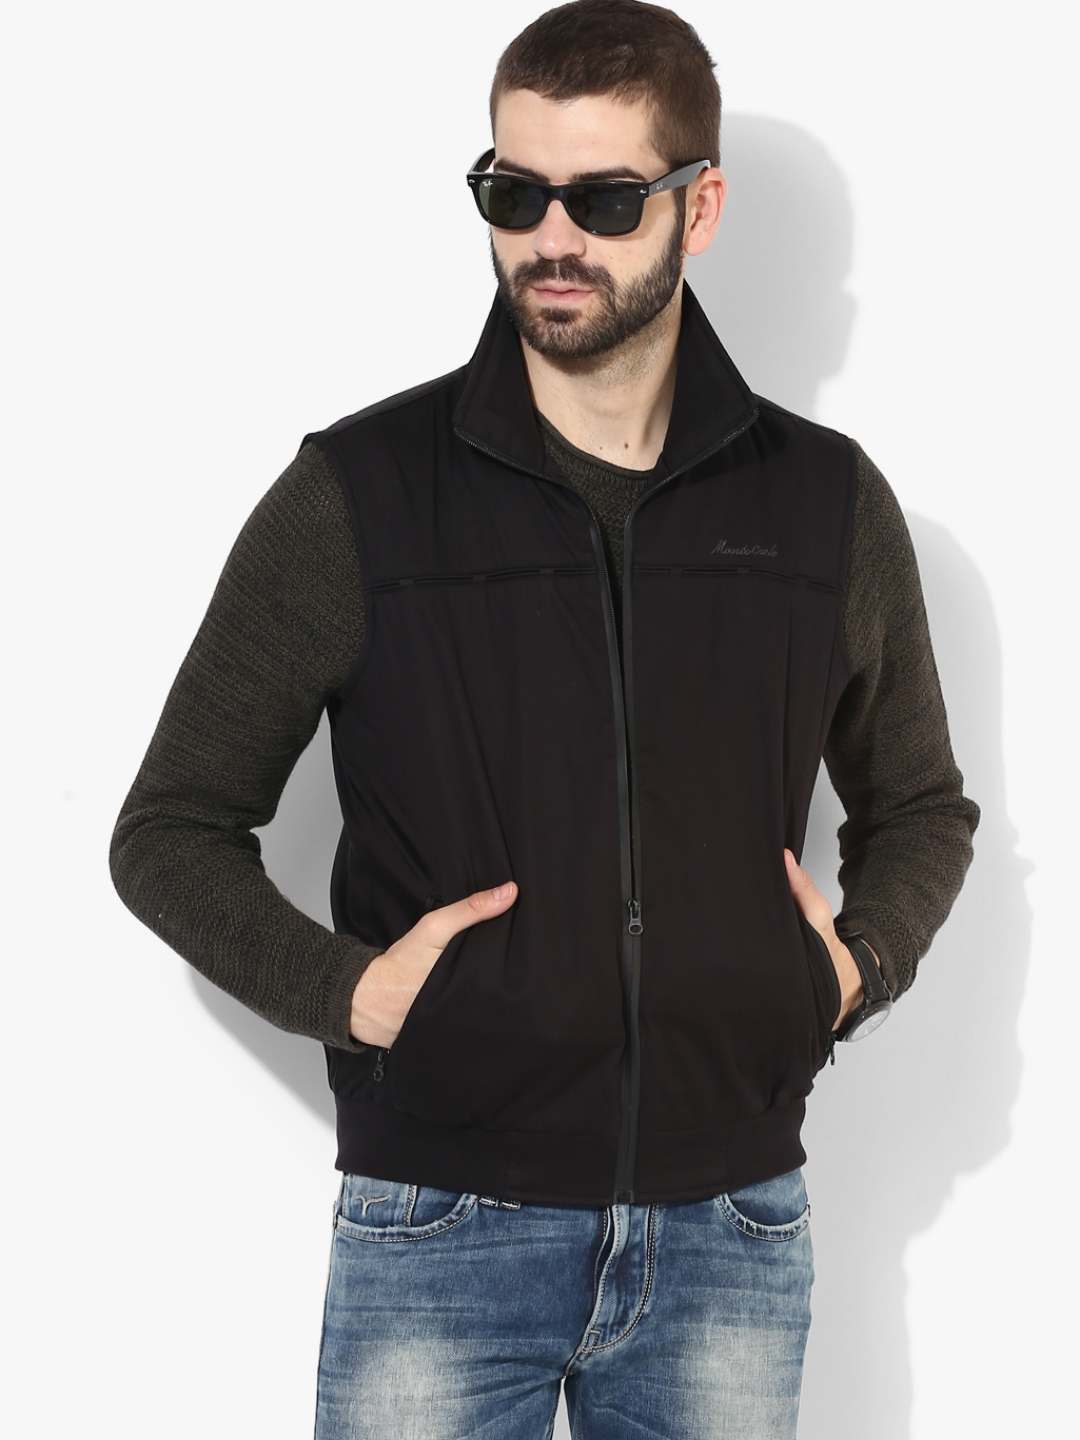 Buy Black Solid Casual Jacket - Jackets for Men 7922715 | Myntra